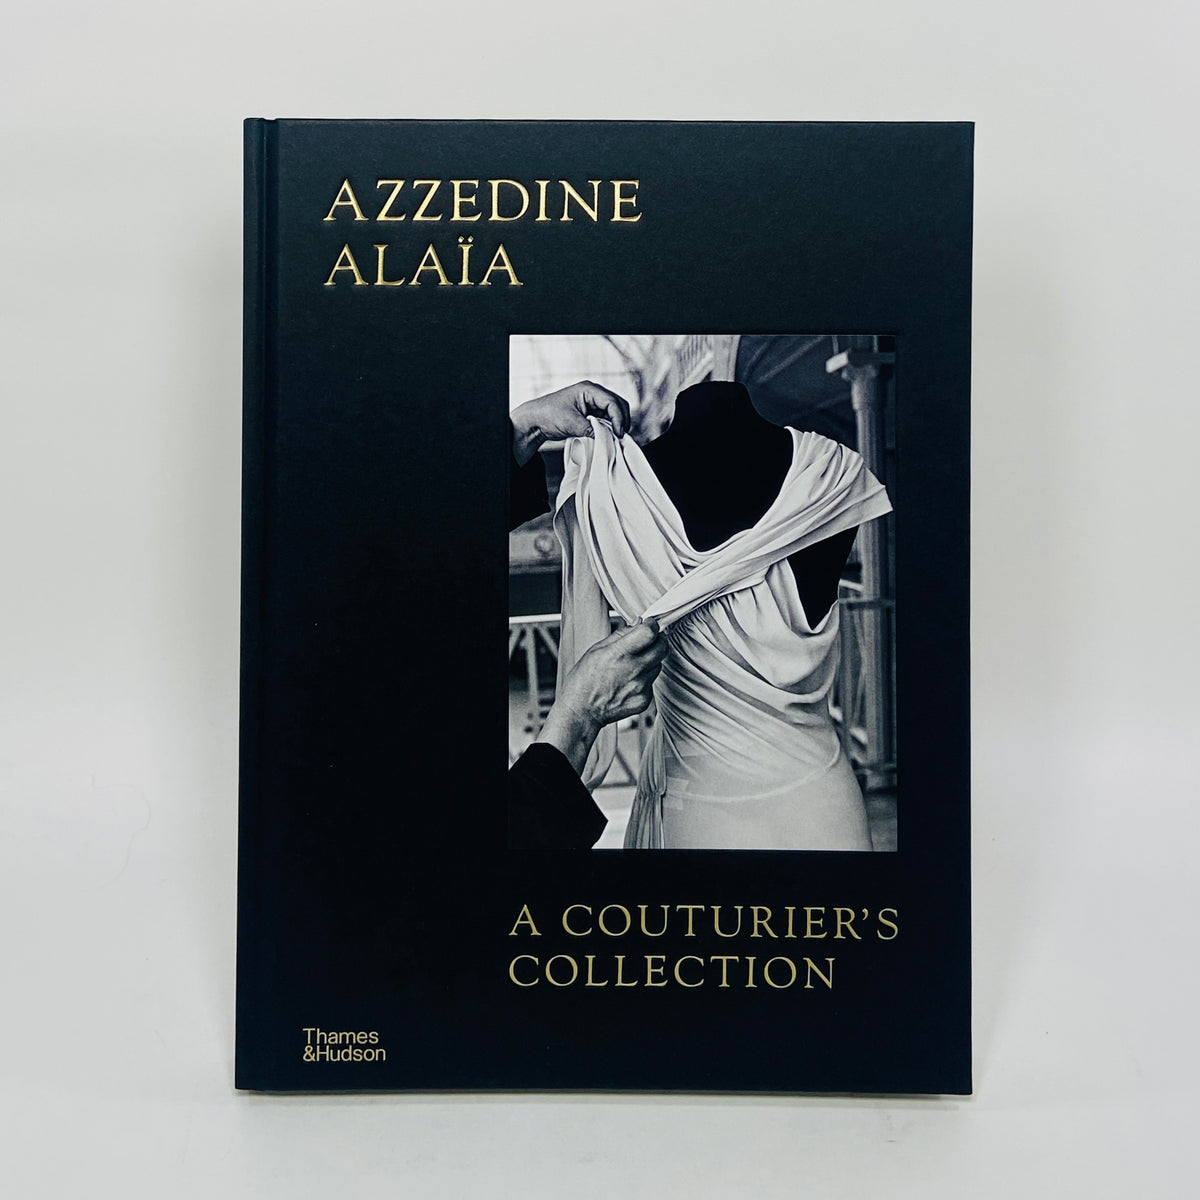 Azzedine Alaïa - A Couturier's Collection